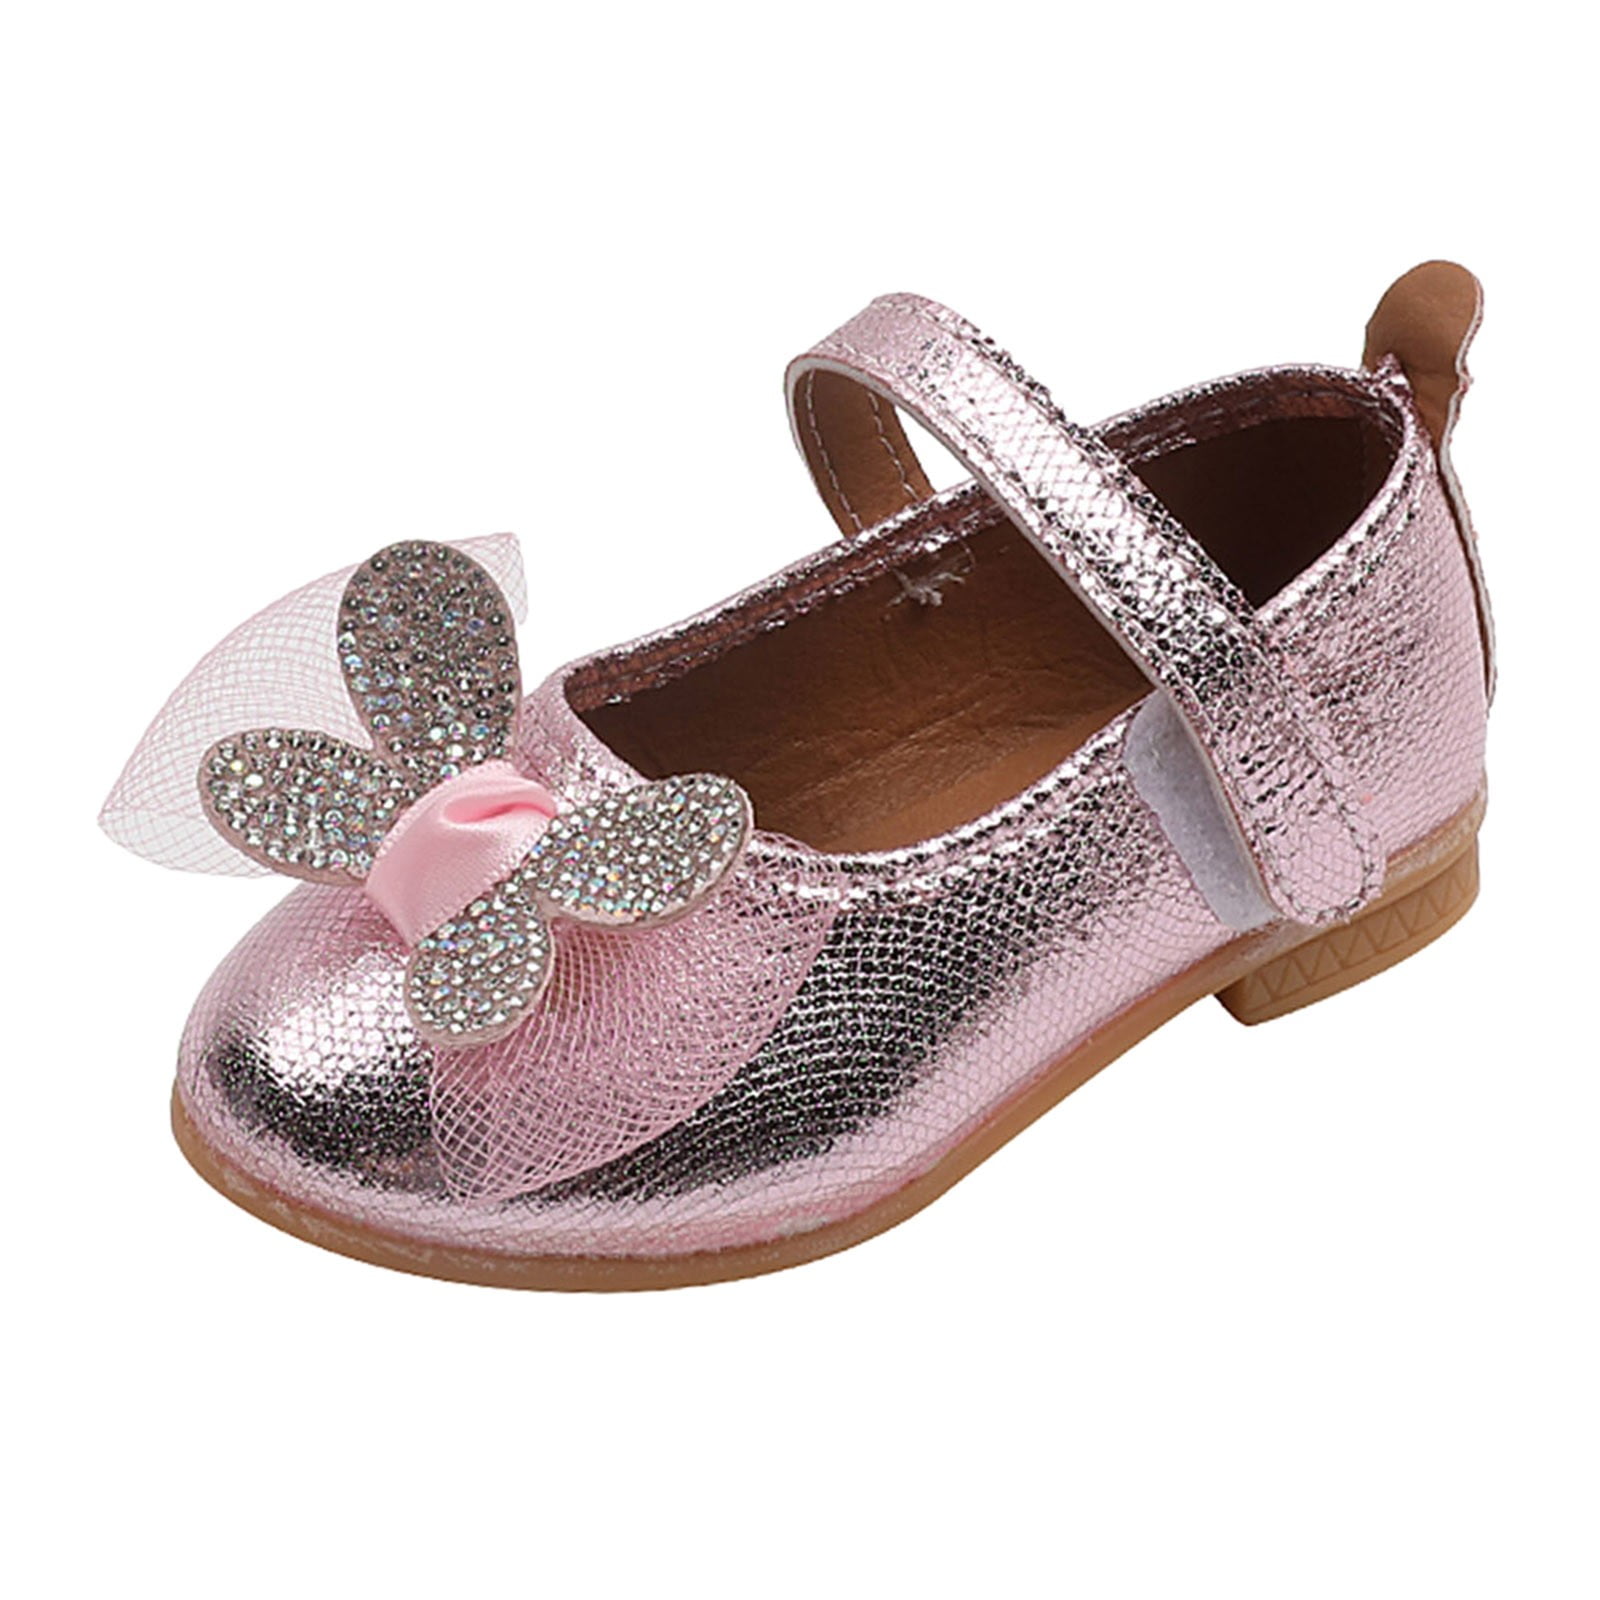 Baycosin Toddler/Little Girls Mary Jane Ballerina Flats Size 13 Shoes ...